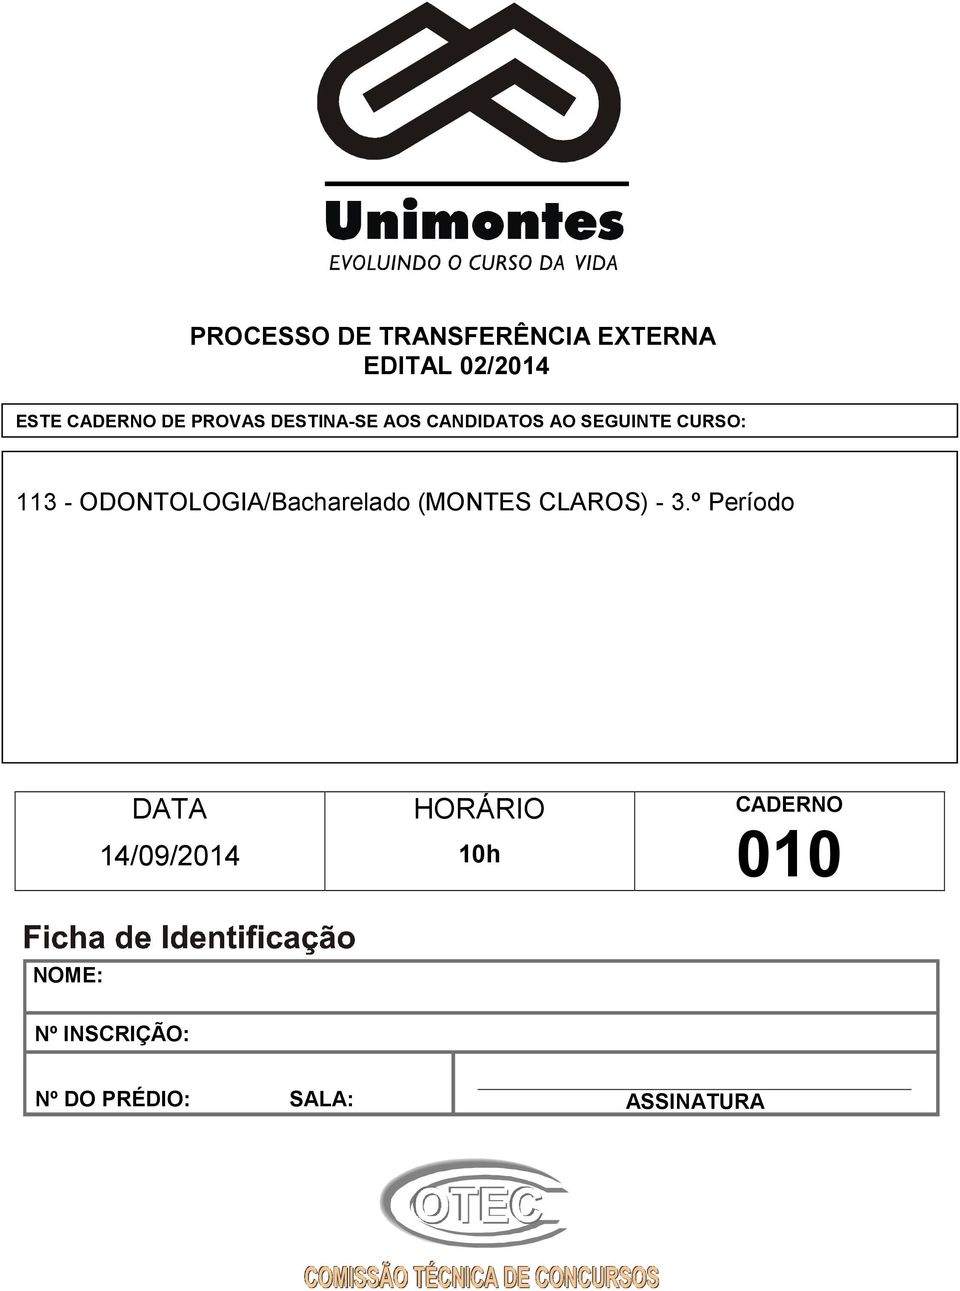 ODONTOLOGIA/Bacharelado (MONTES CLAROS) - 3.